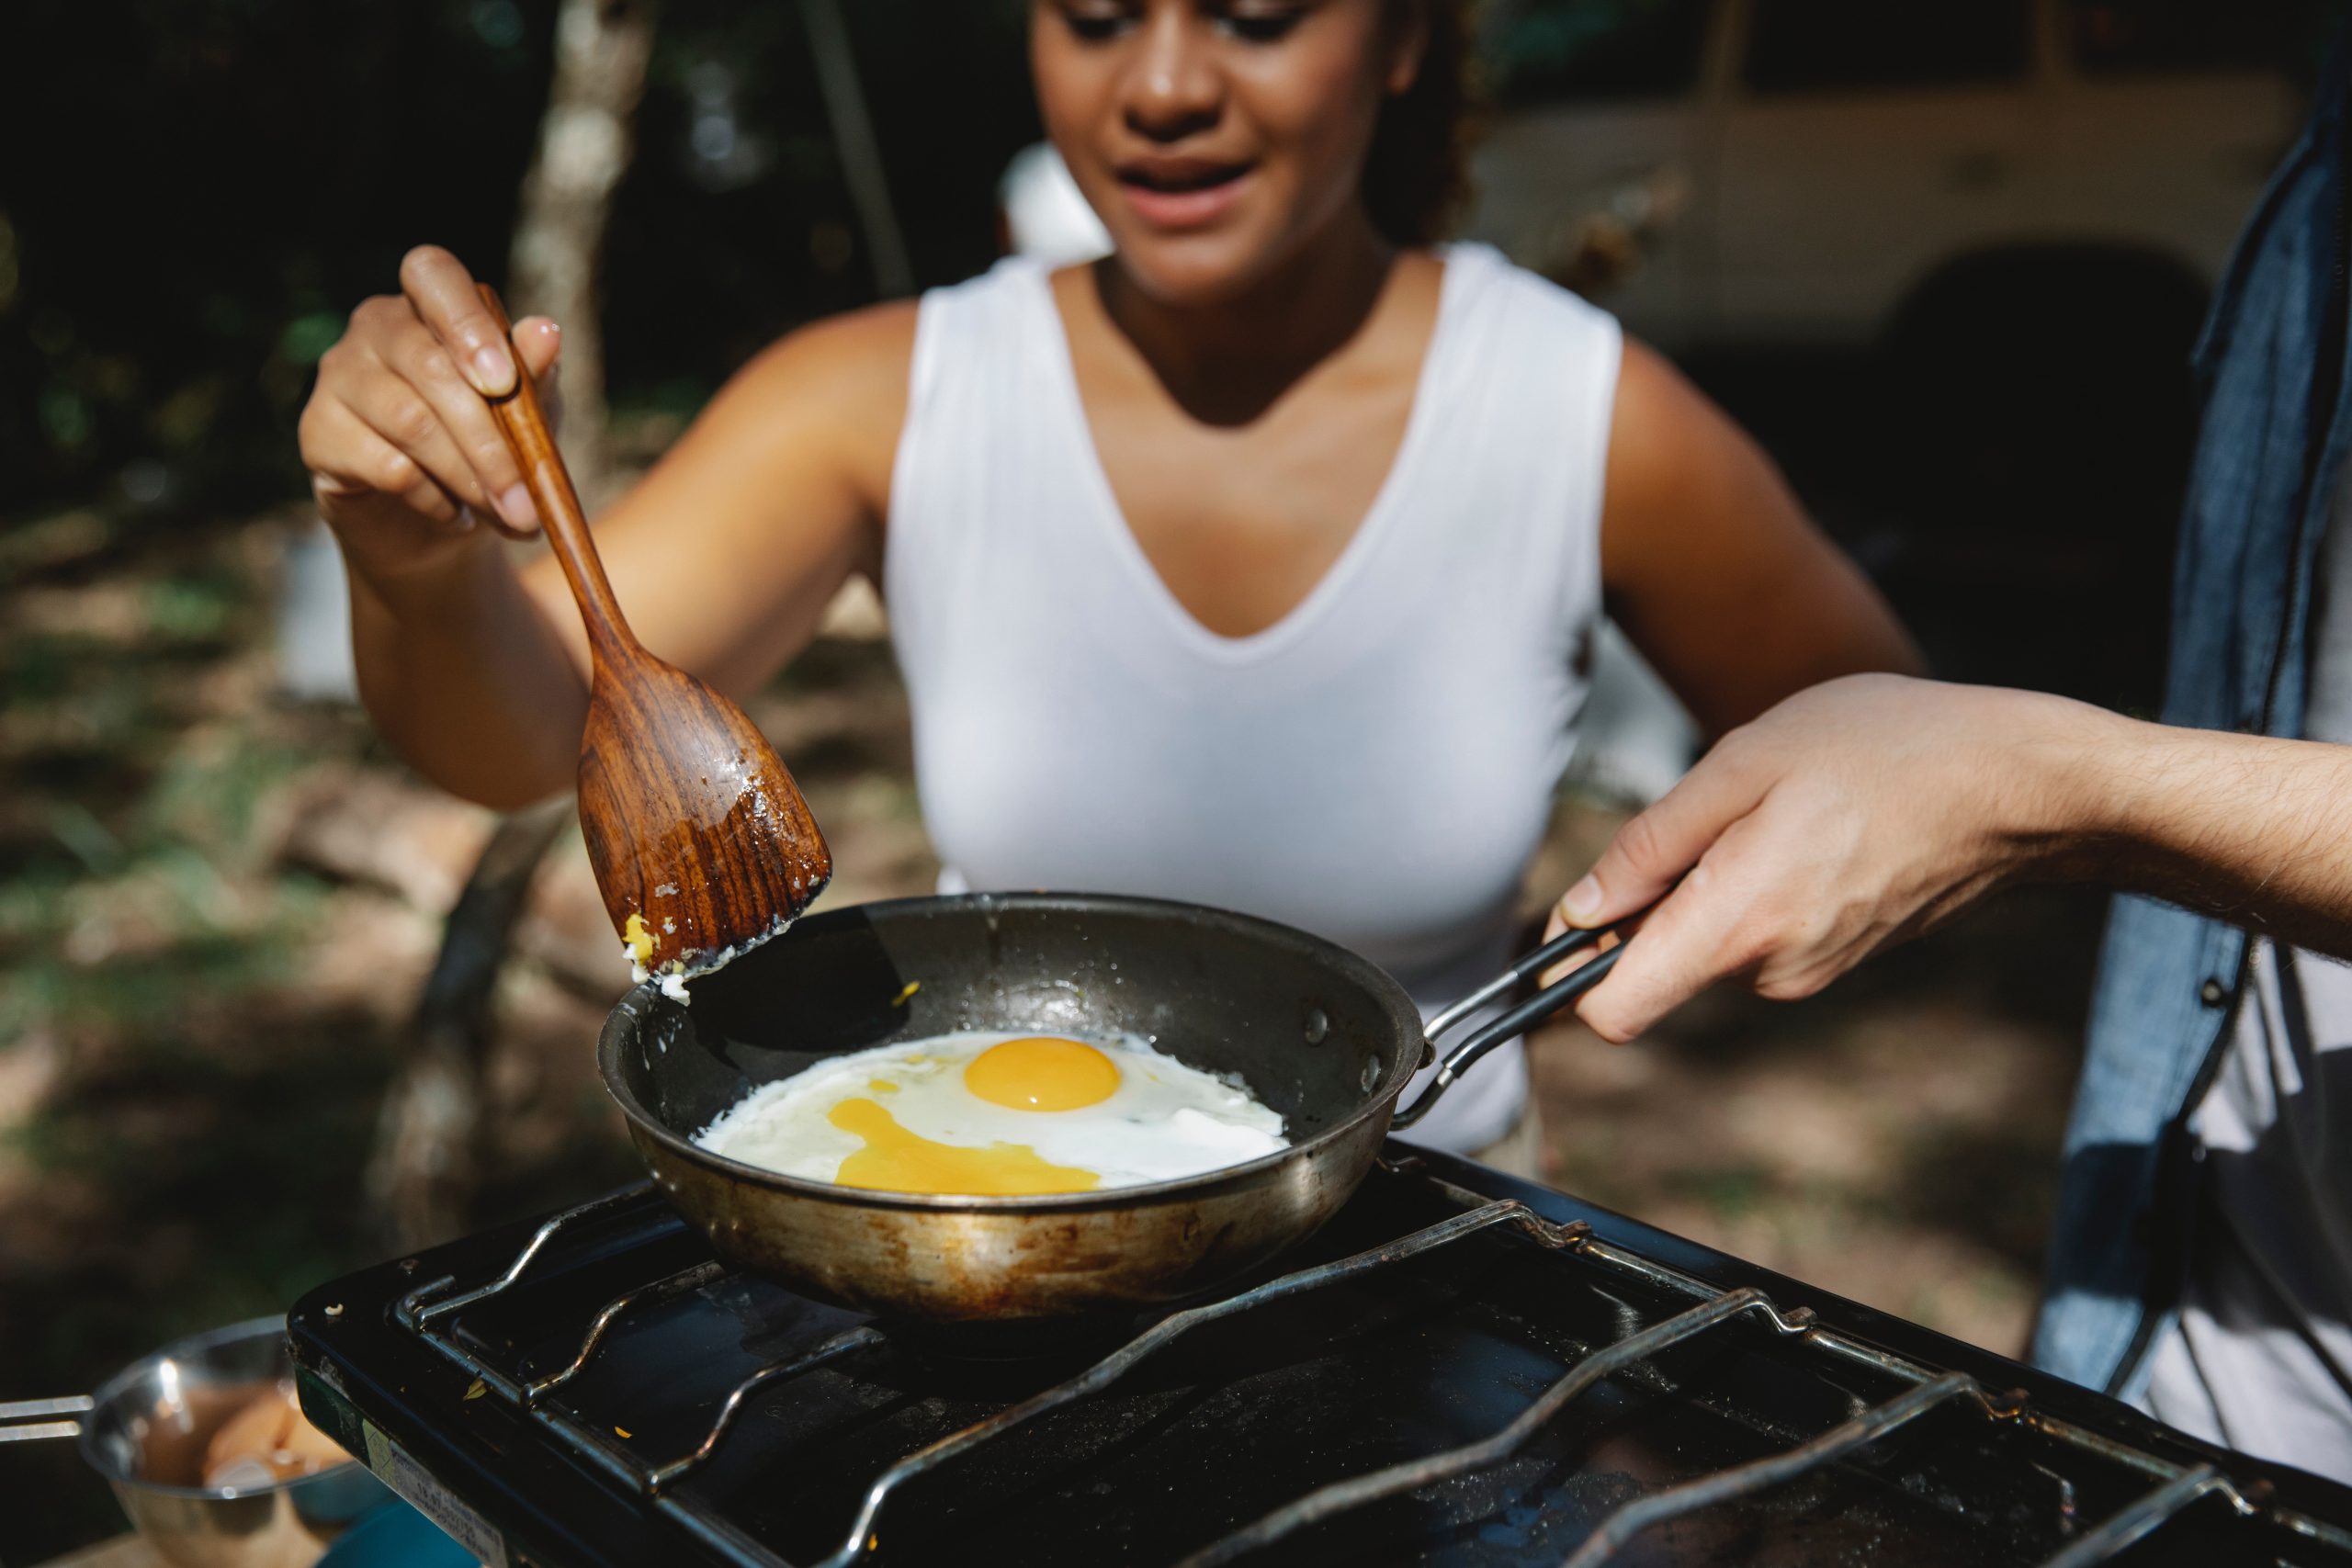 Comida de acampamento: O que levar de comida para acampar?